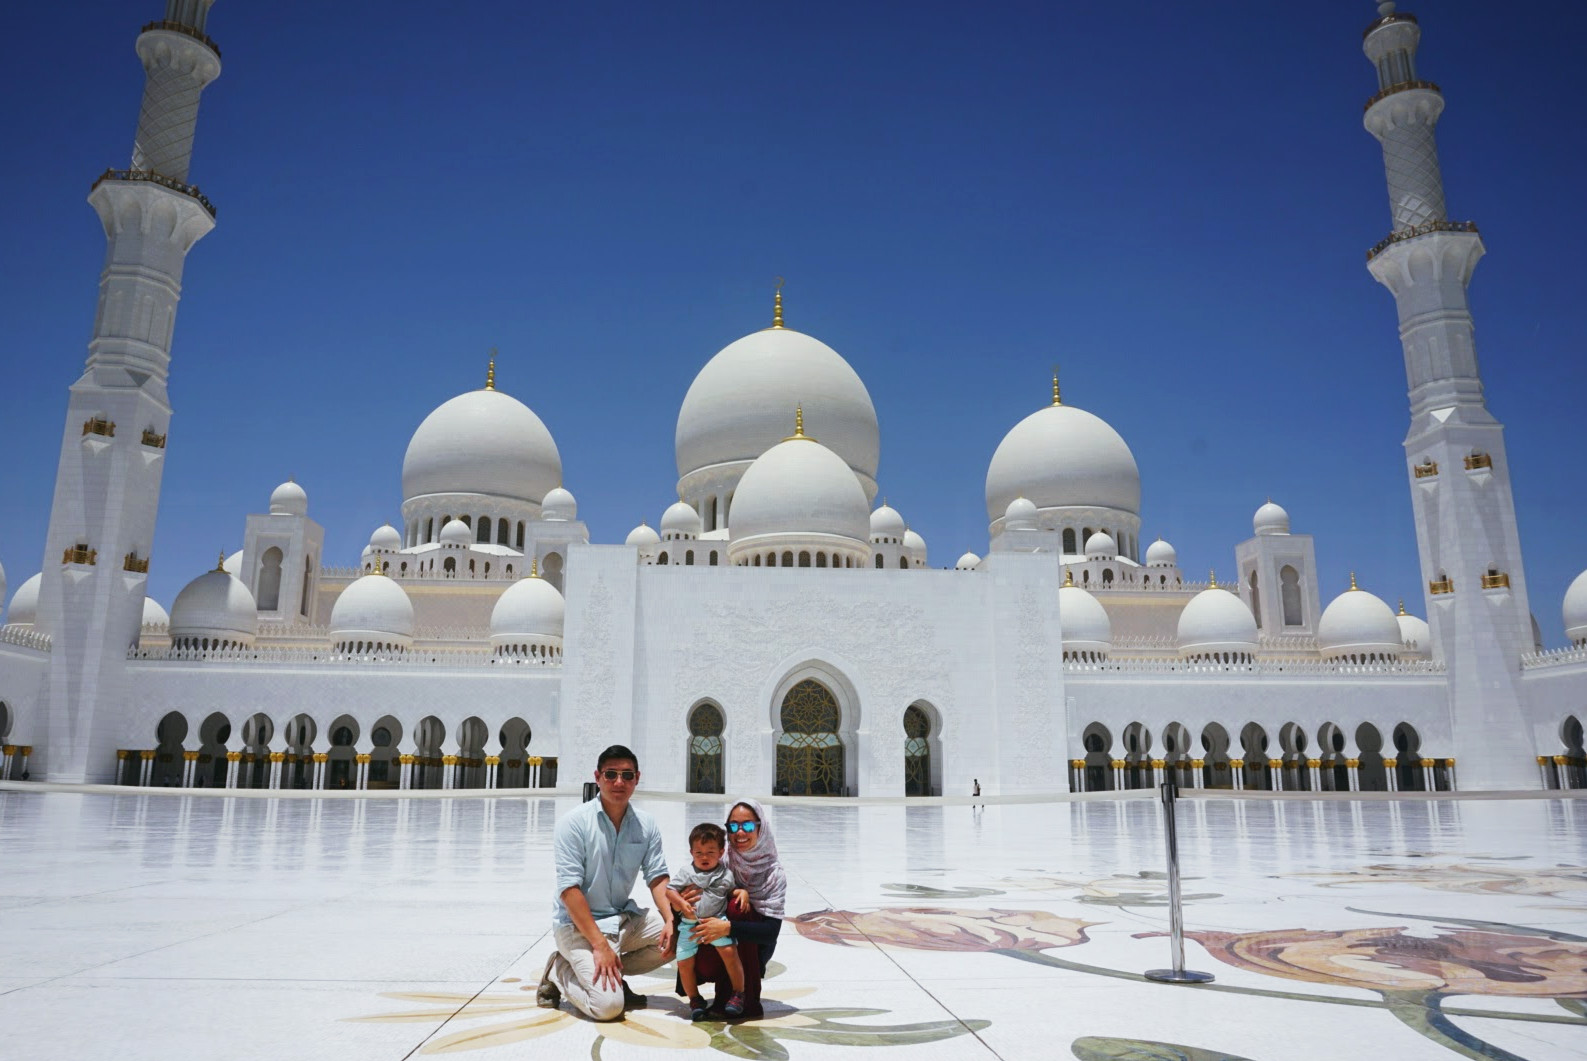 UAE_Abu Dhabi_Sheikh Zayed Mosque_Lee family travel with baby.jpg